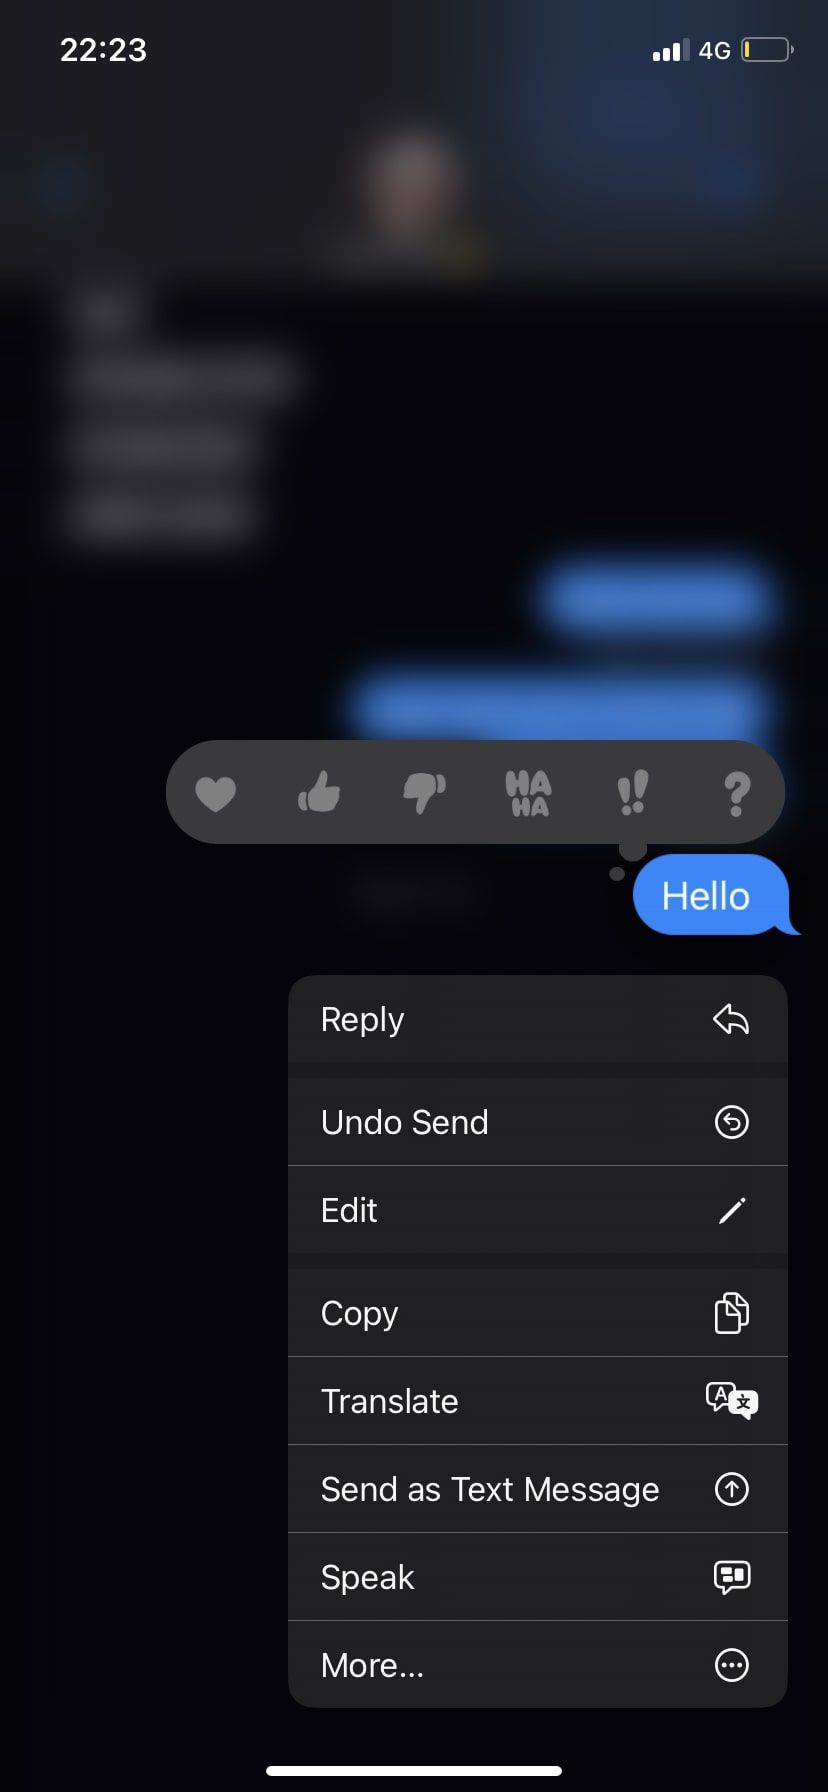 undo send and edit options